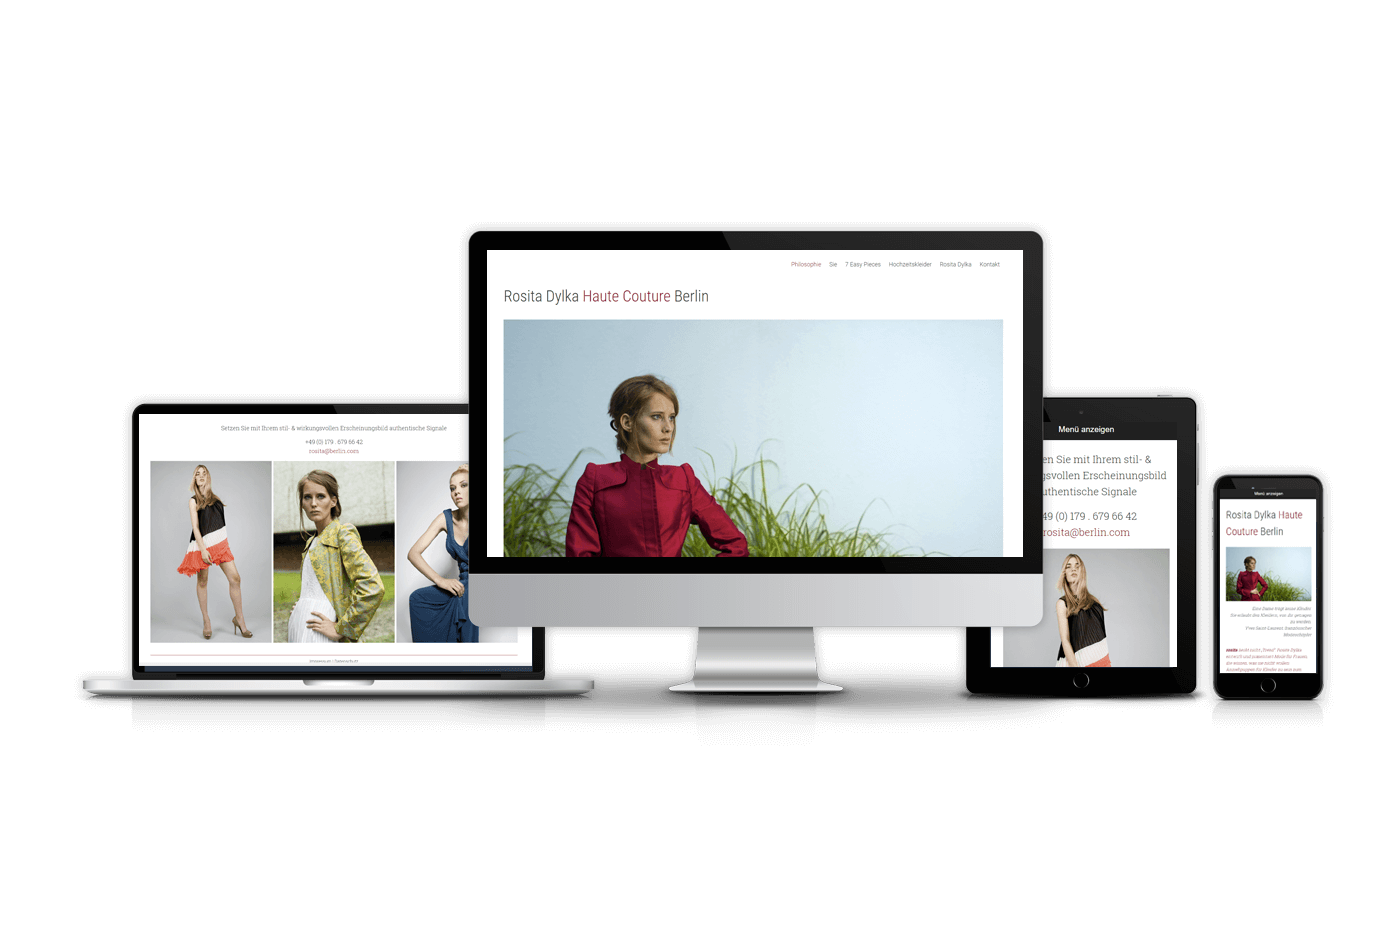 webdesign-wiesbaden-pixel-mehr-webseite-rosita-dylka-haute-couture-berlin